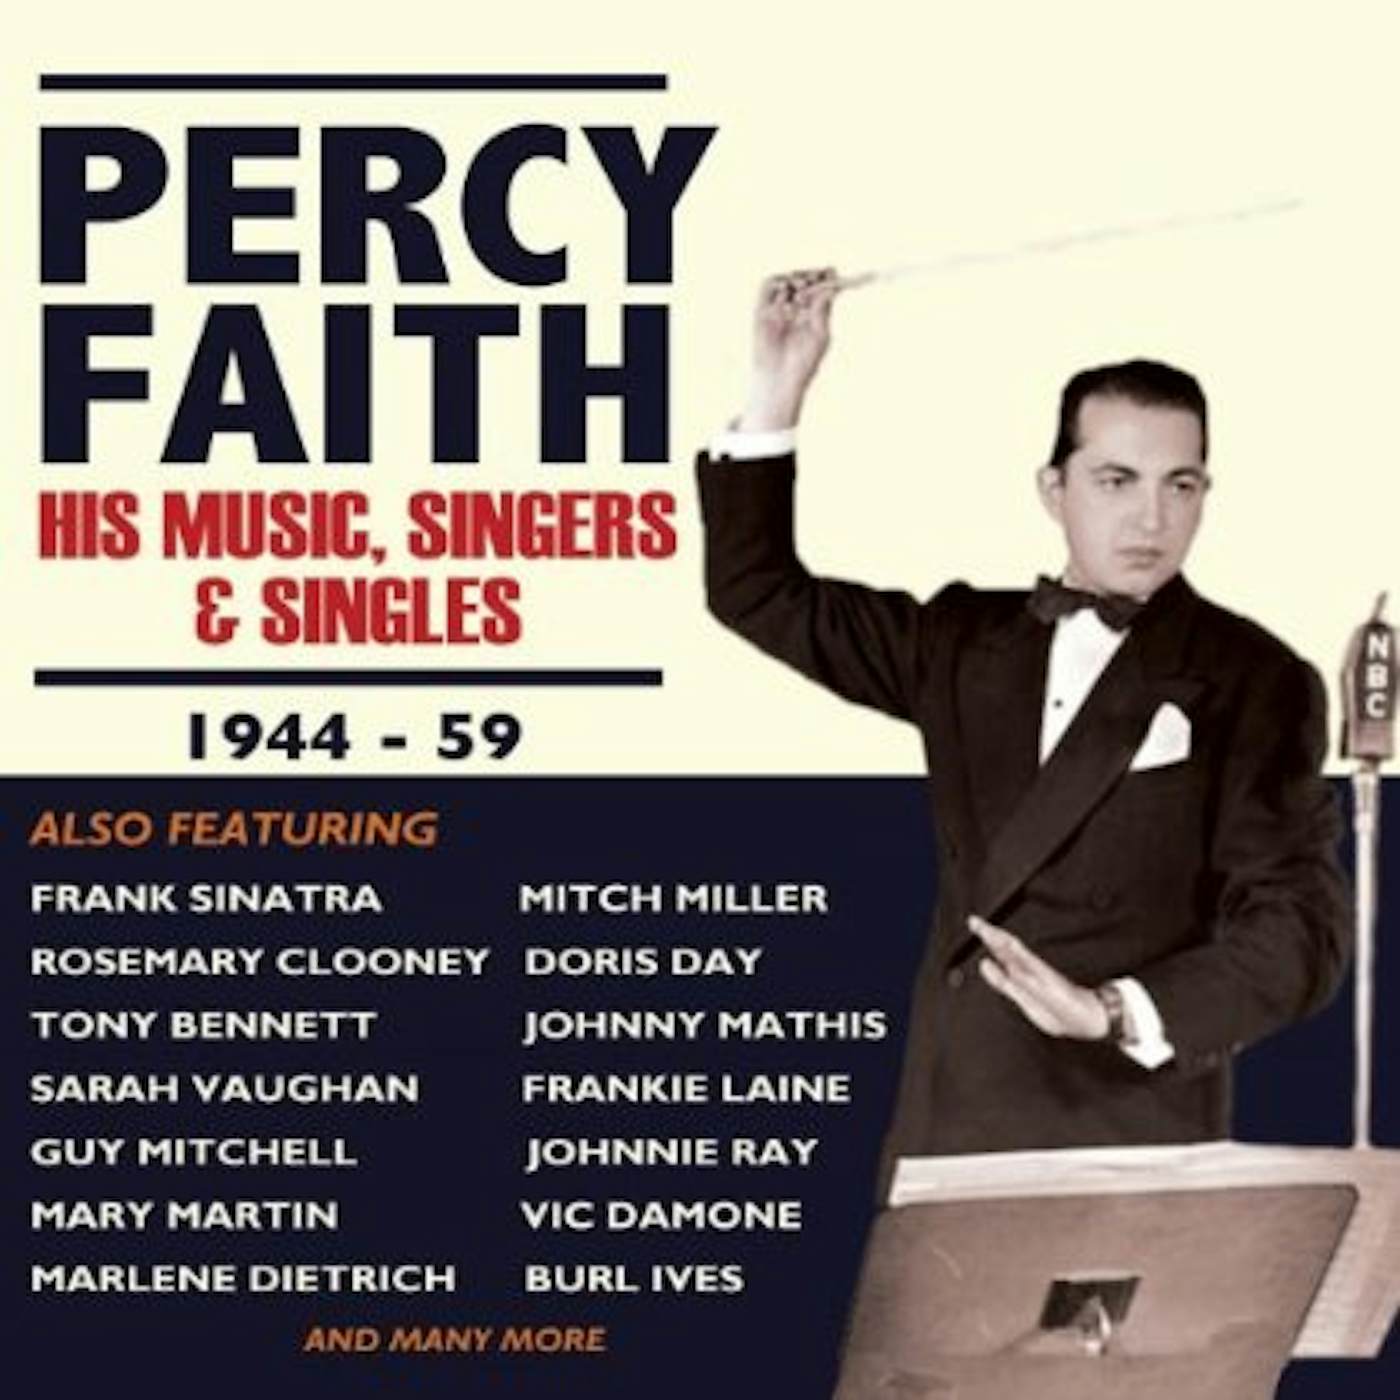 Percy Faith HIS MUSIC, SINGERS & SINGLES CD